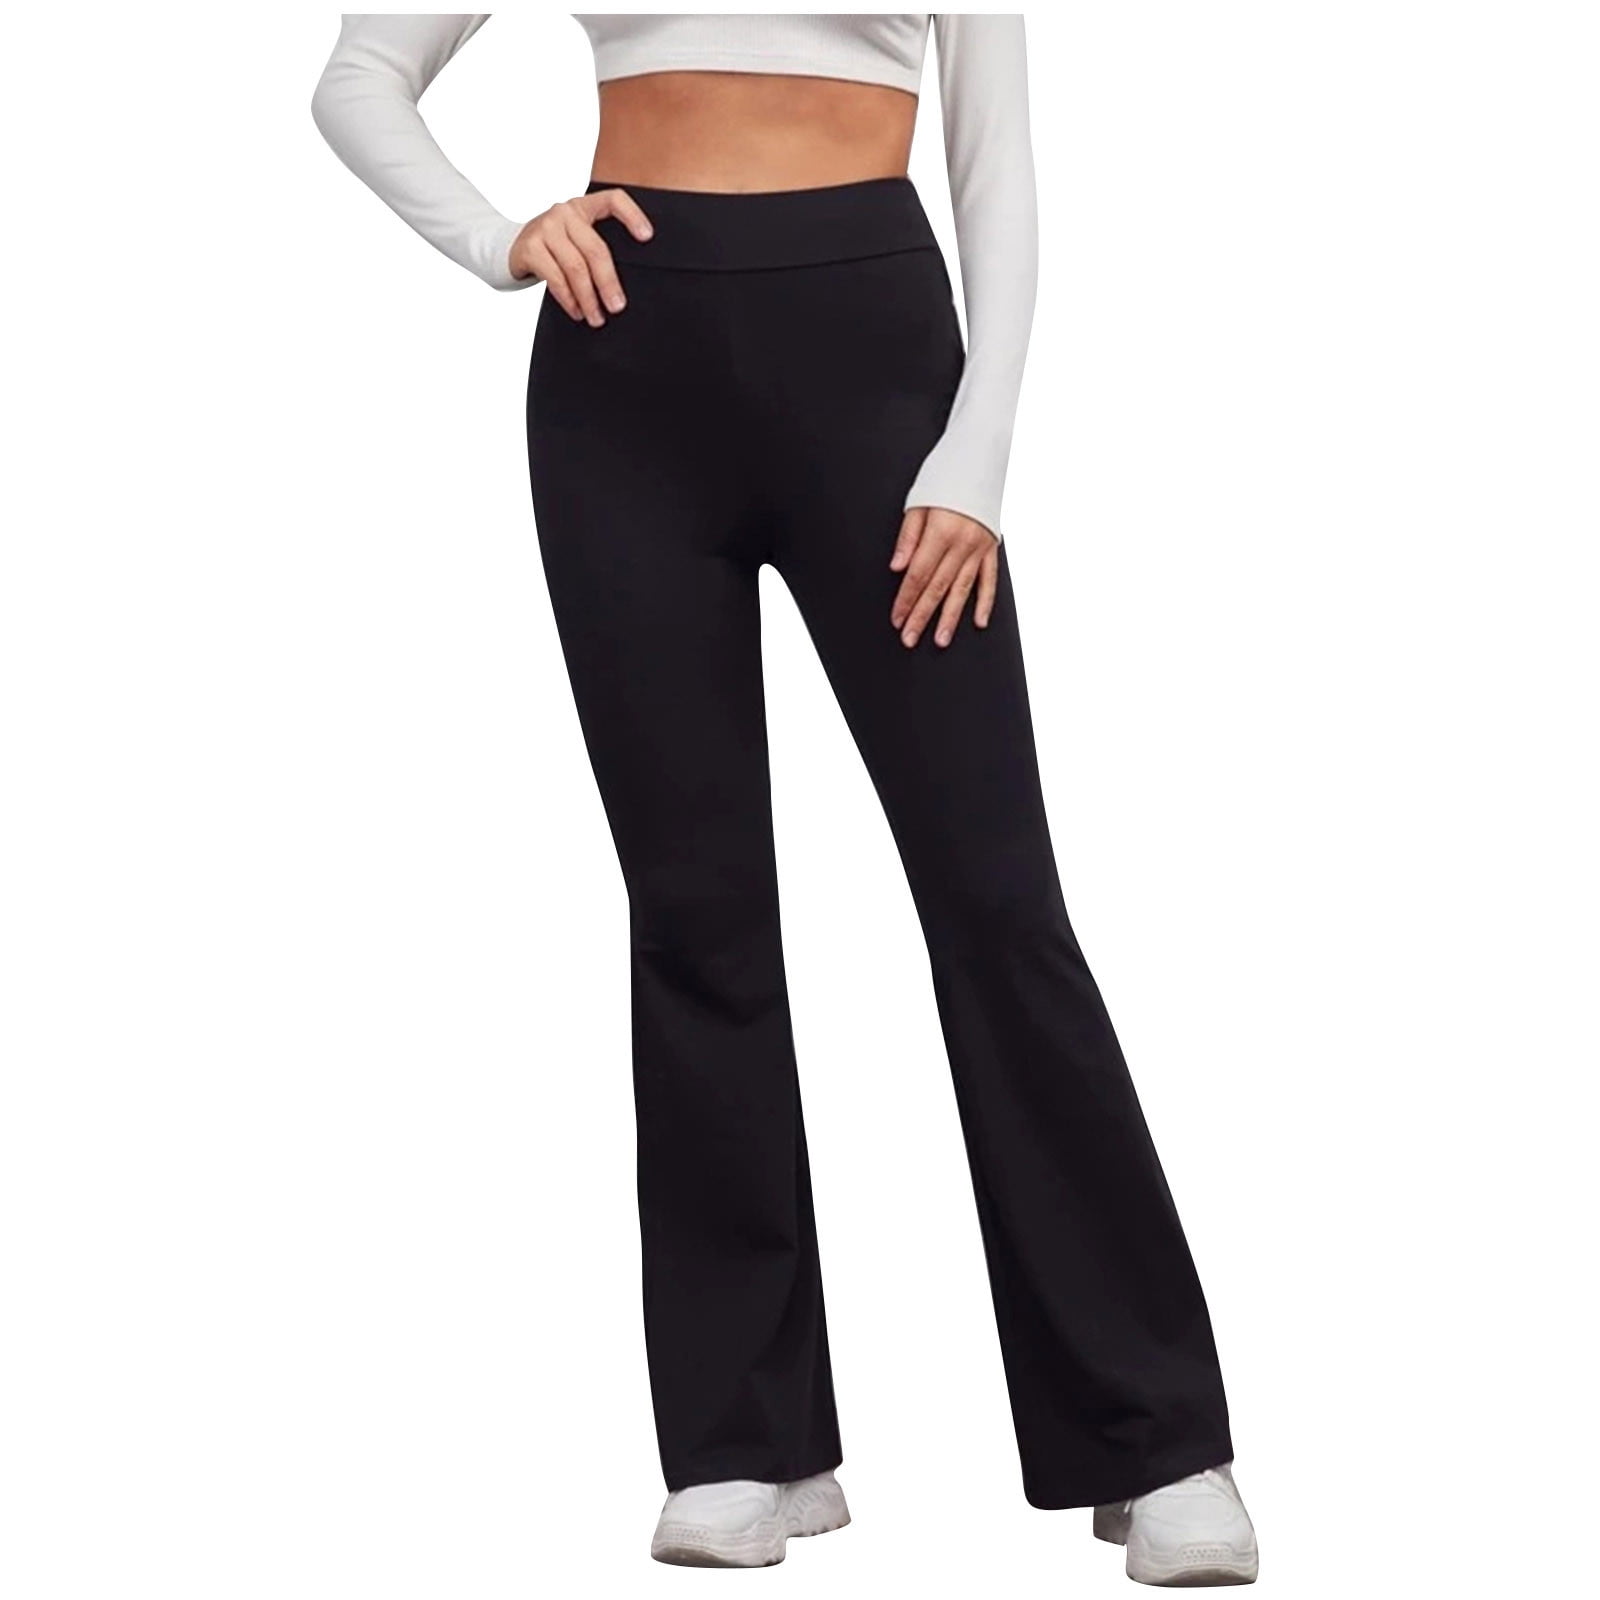 Mrat High Waisted Athletic Pants Full Length Yoga Pants Women's